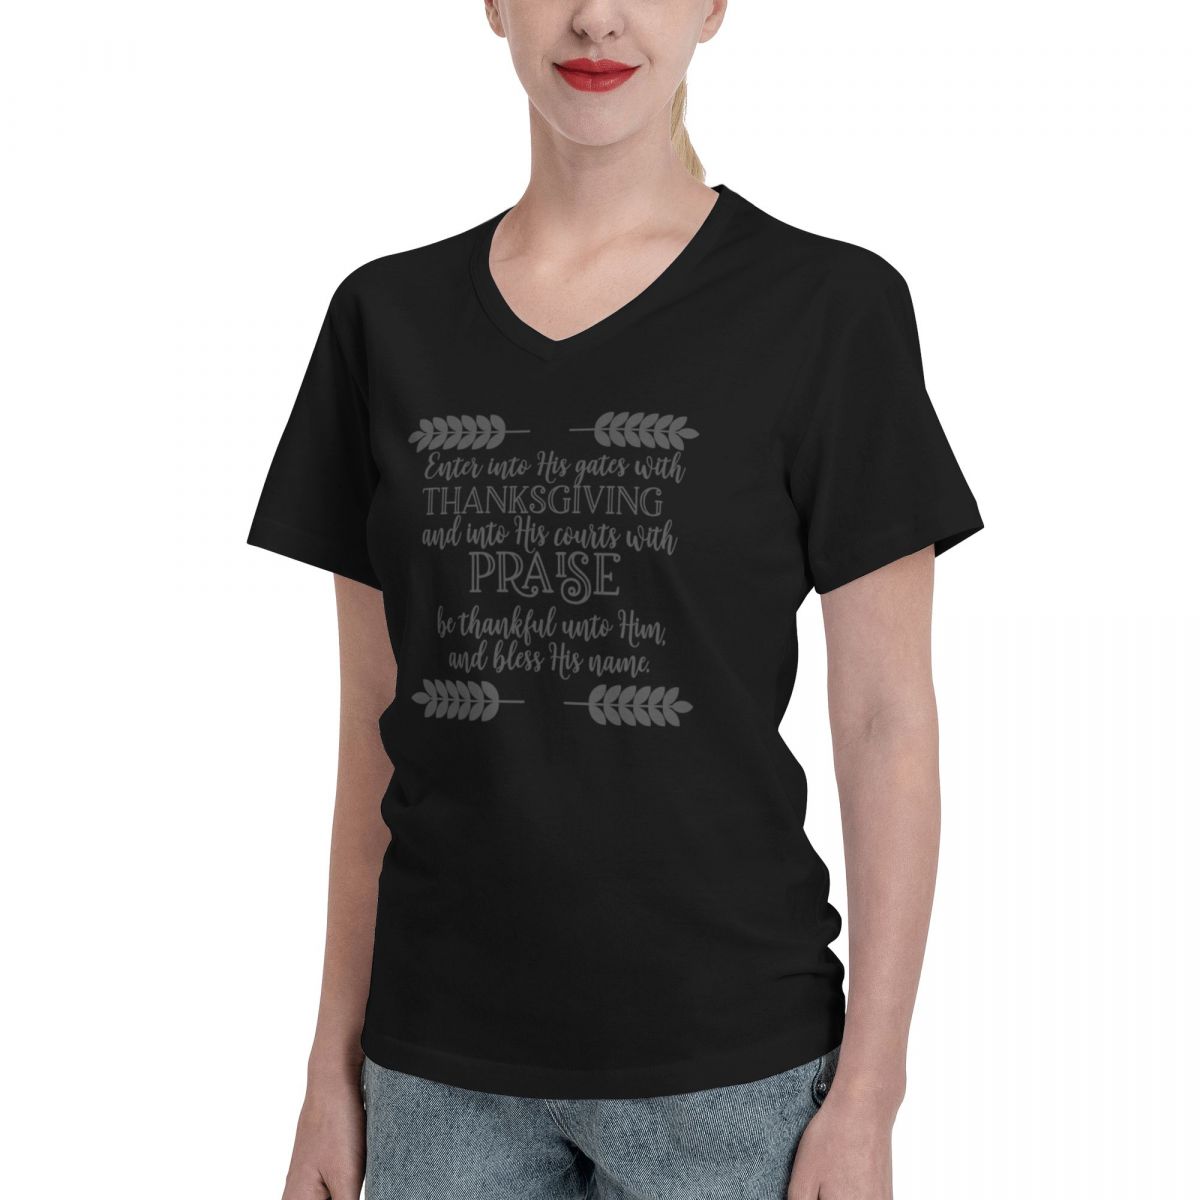 Give Praise Women's Classic-Fit Short-Sleeve V-Neck T-Shirt